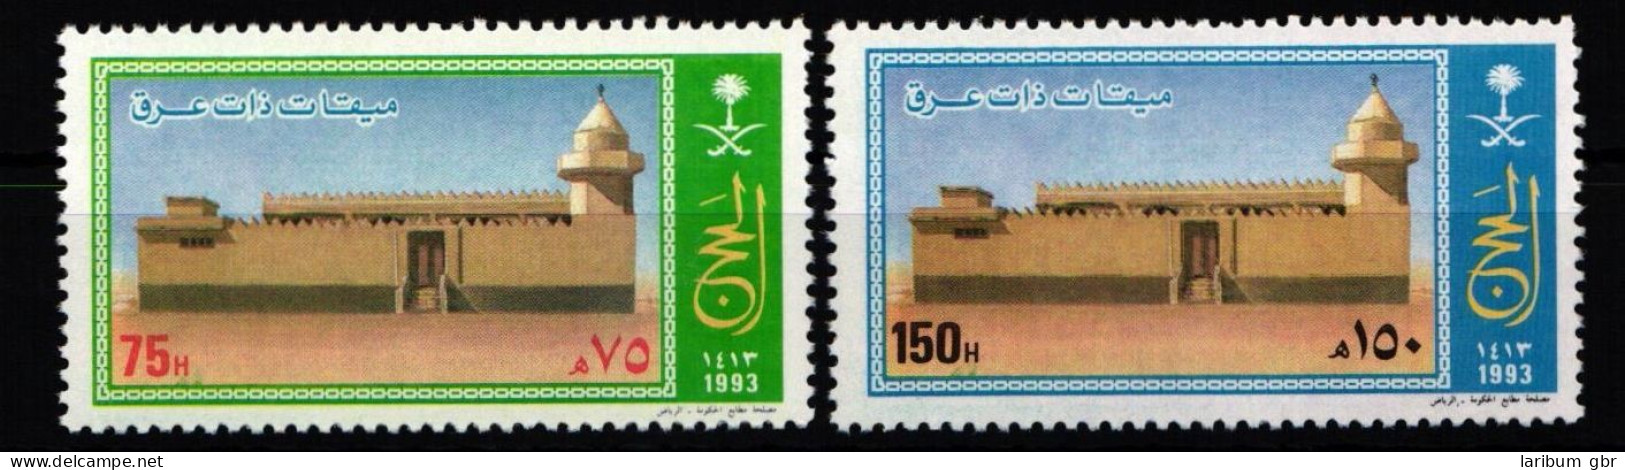 Saudi Arabien 1184-1185 Postfrisch #JZ752 - Saudi Arabia